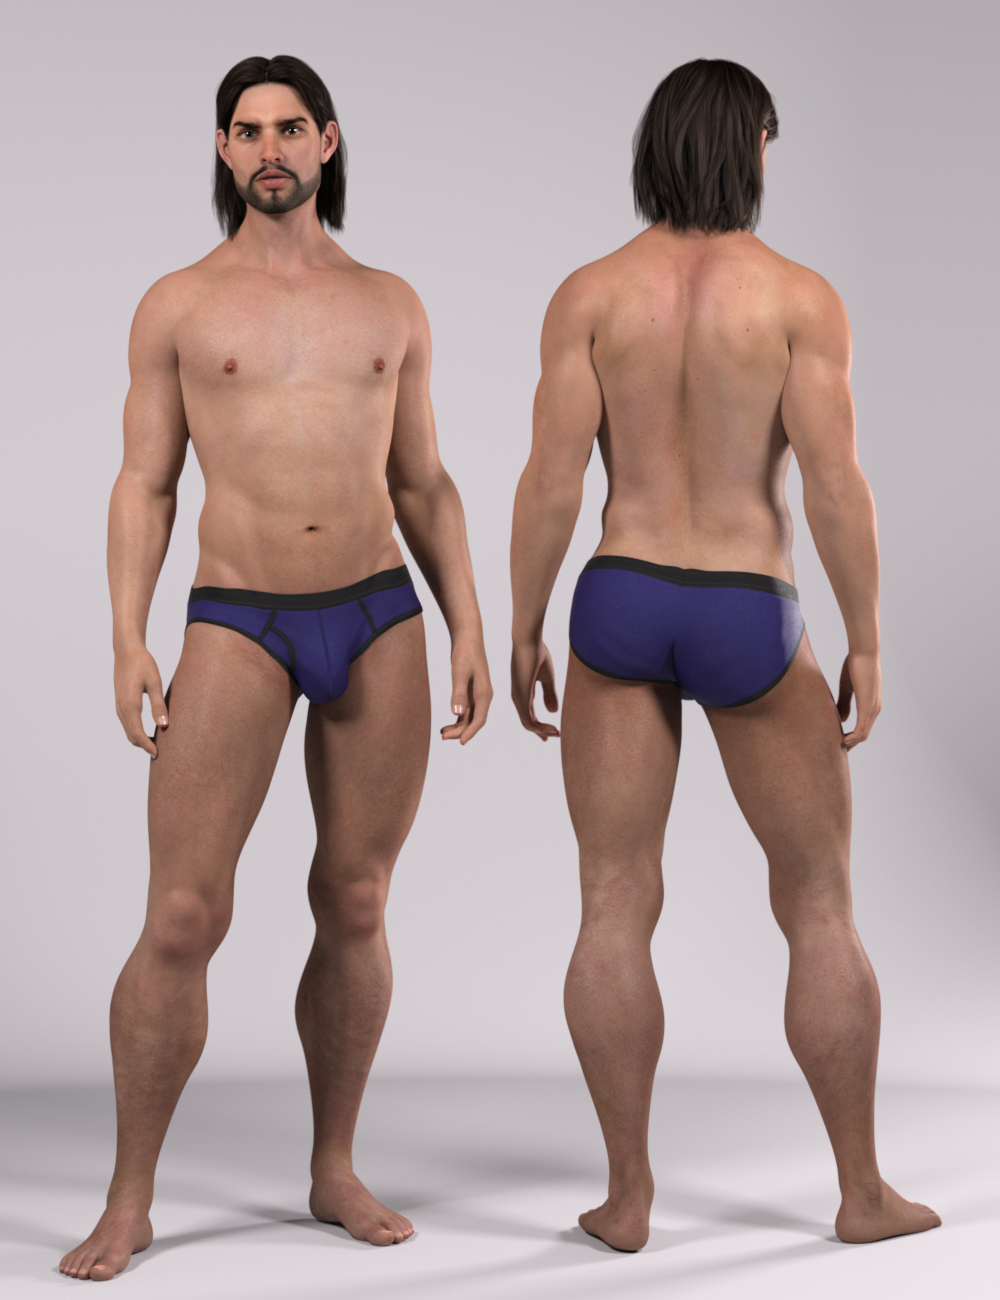 Xander for Genesis 8 Male by: JavierMicheal, 3D Models by Daz 3D